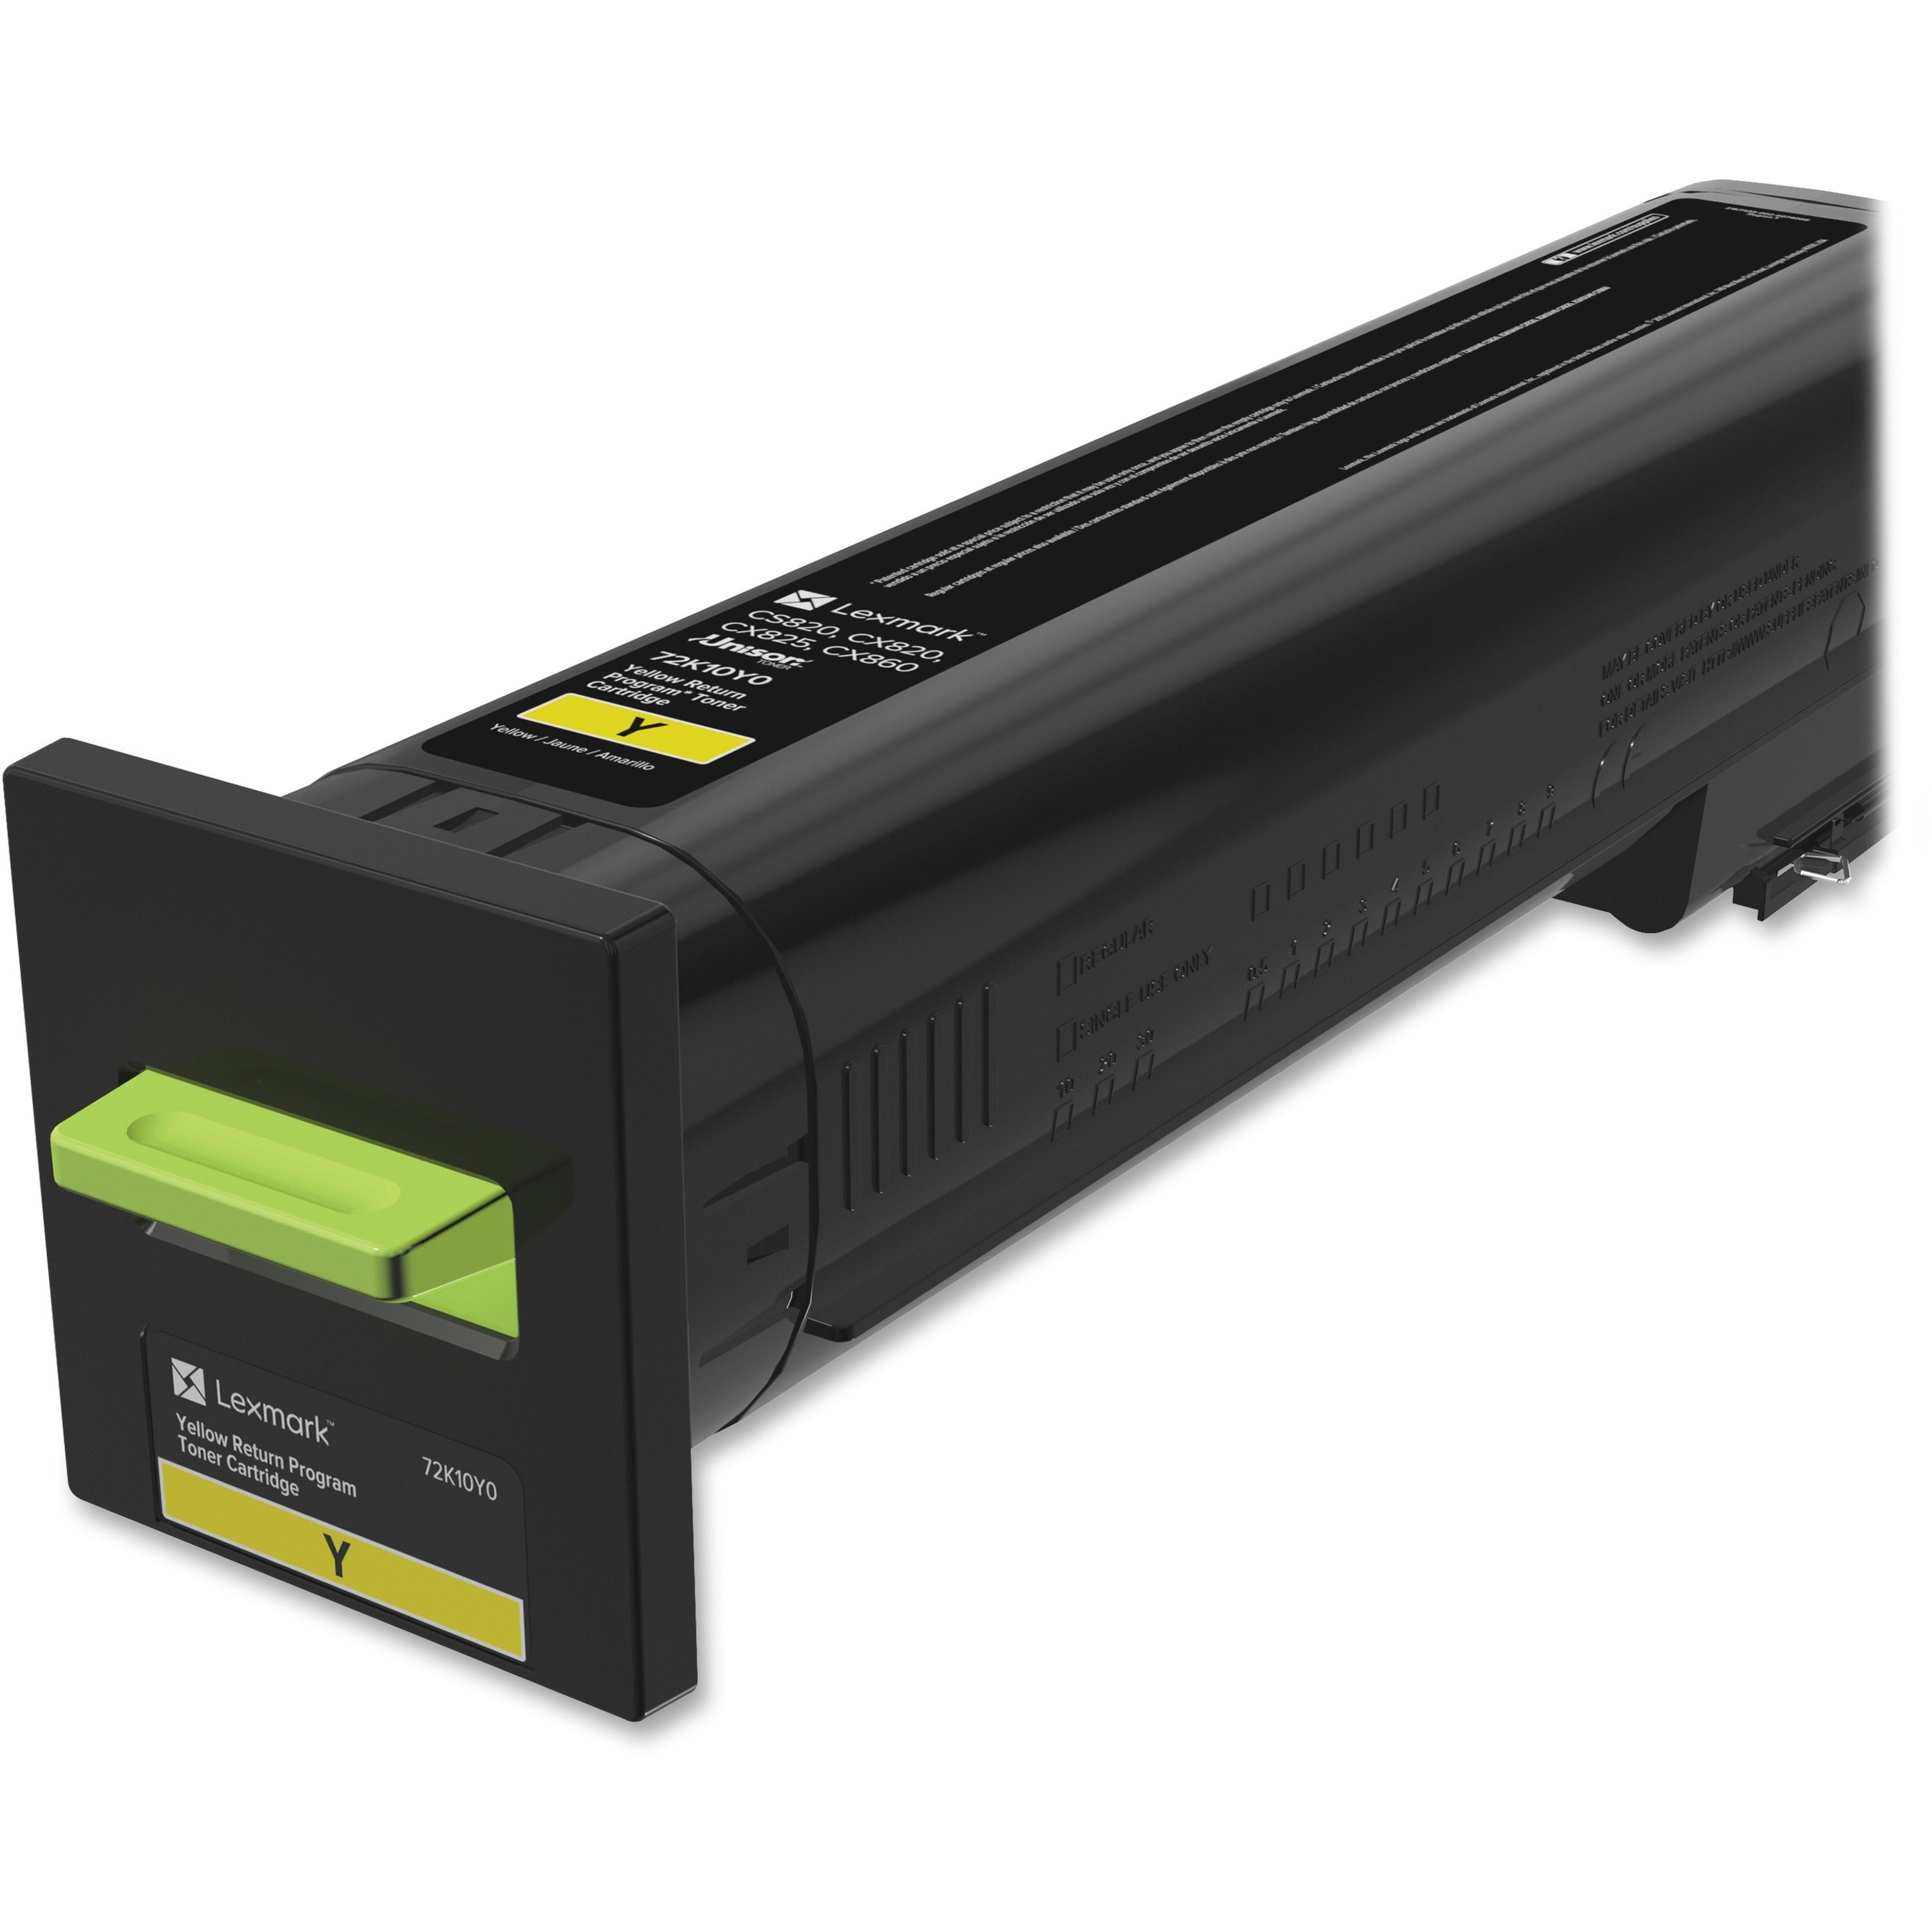 lexmark-unison-original-toner-cartridge-laser-standard-yield-8000-pages-yellow-1-each_lex72k10y0 - 1